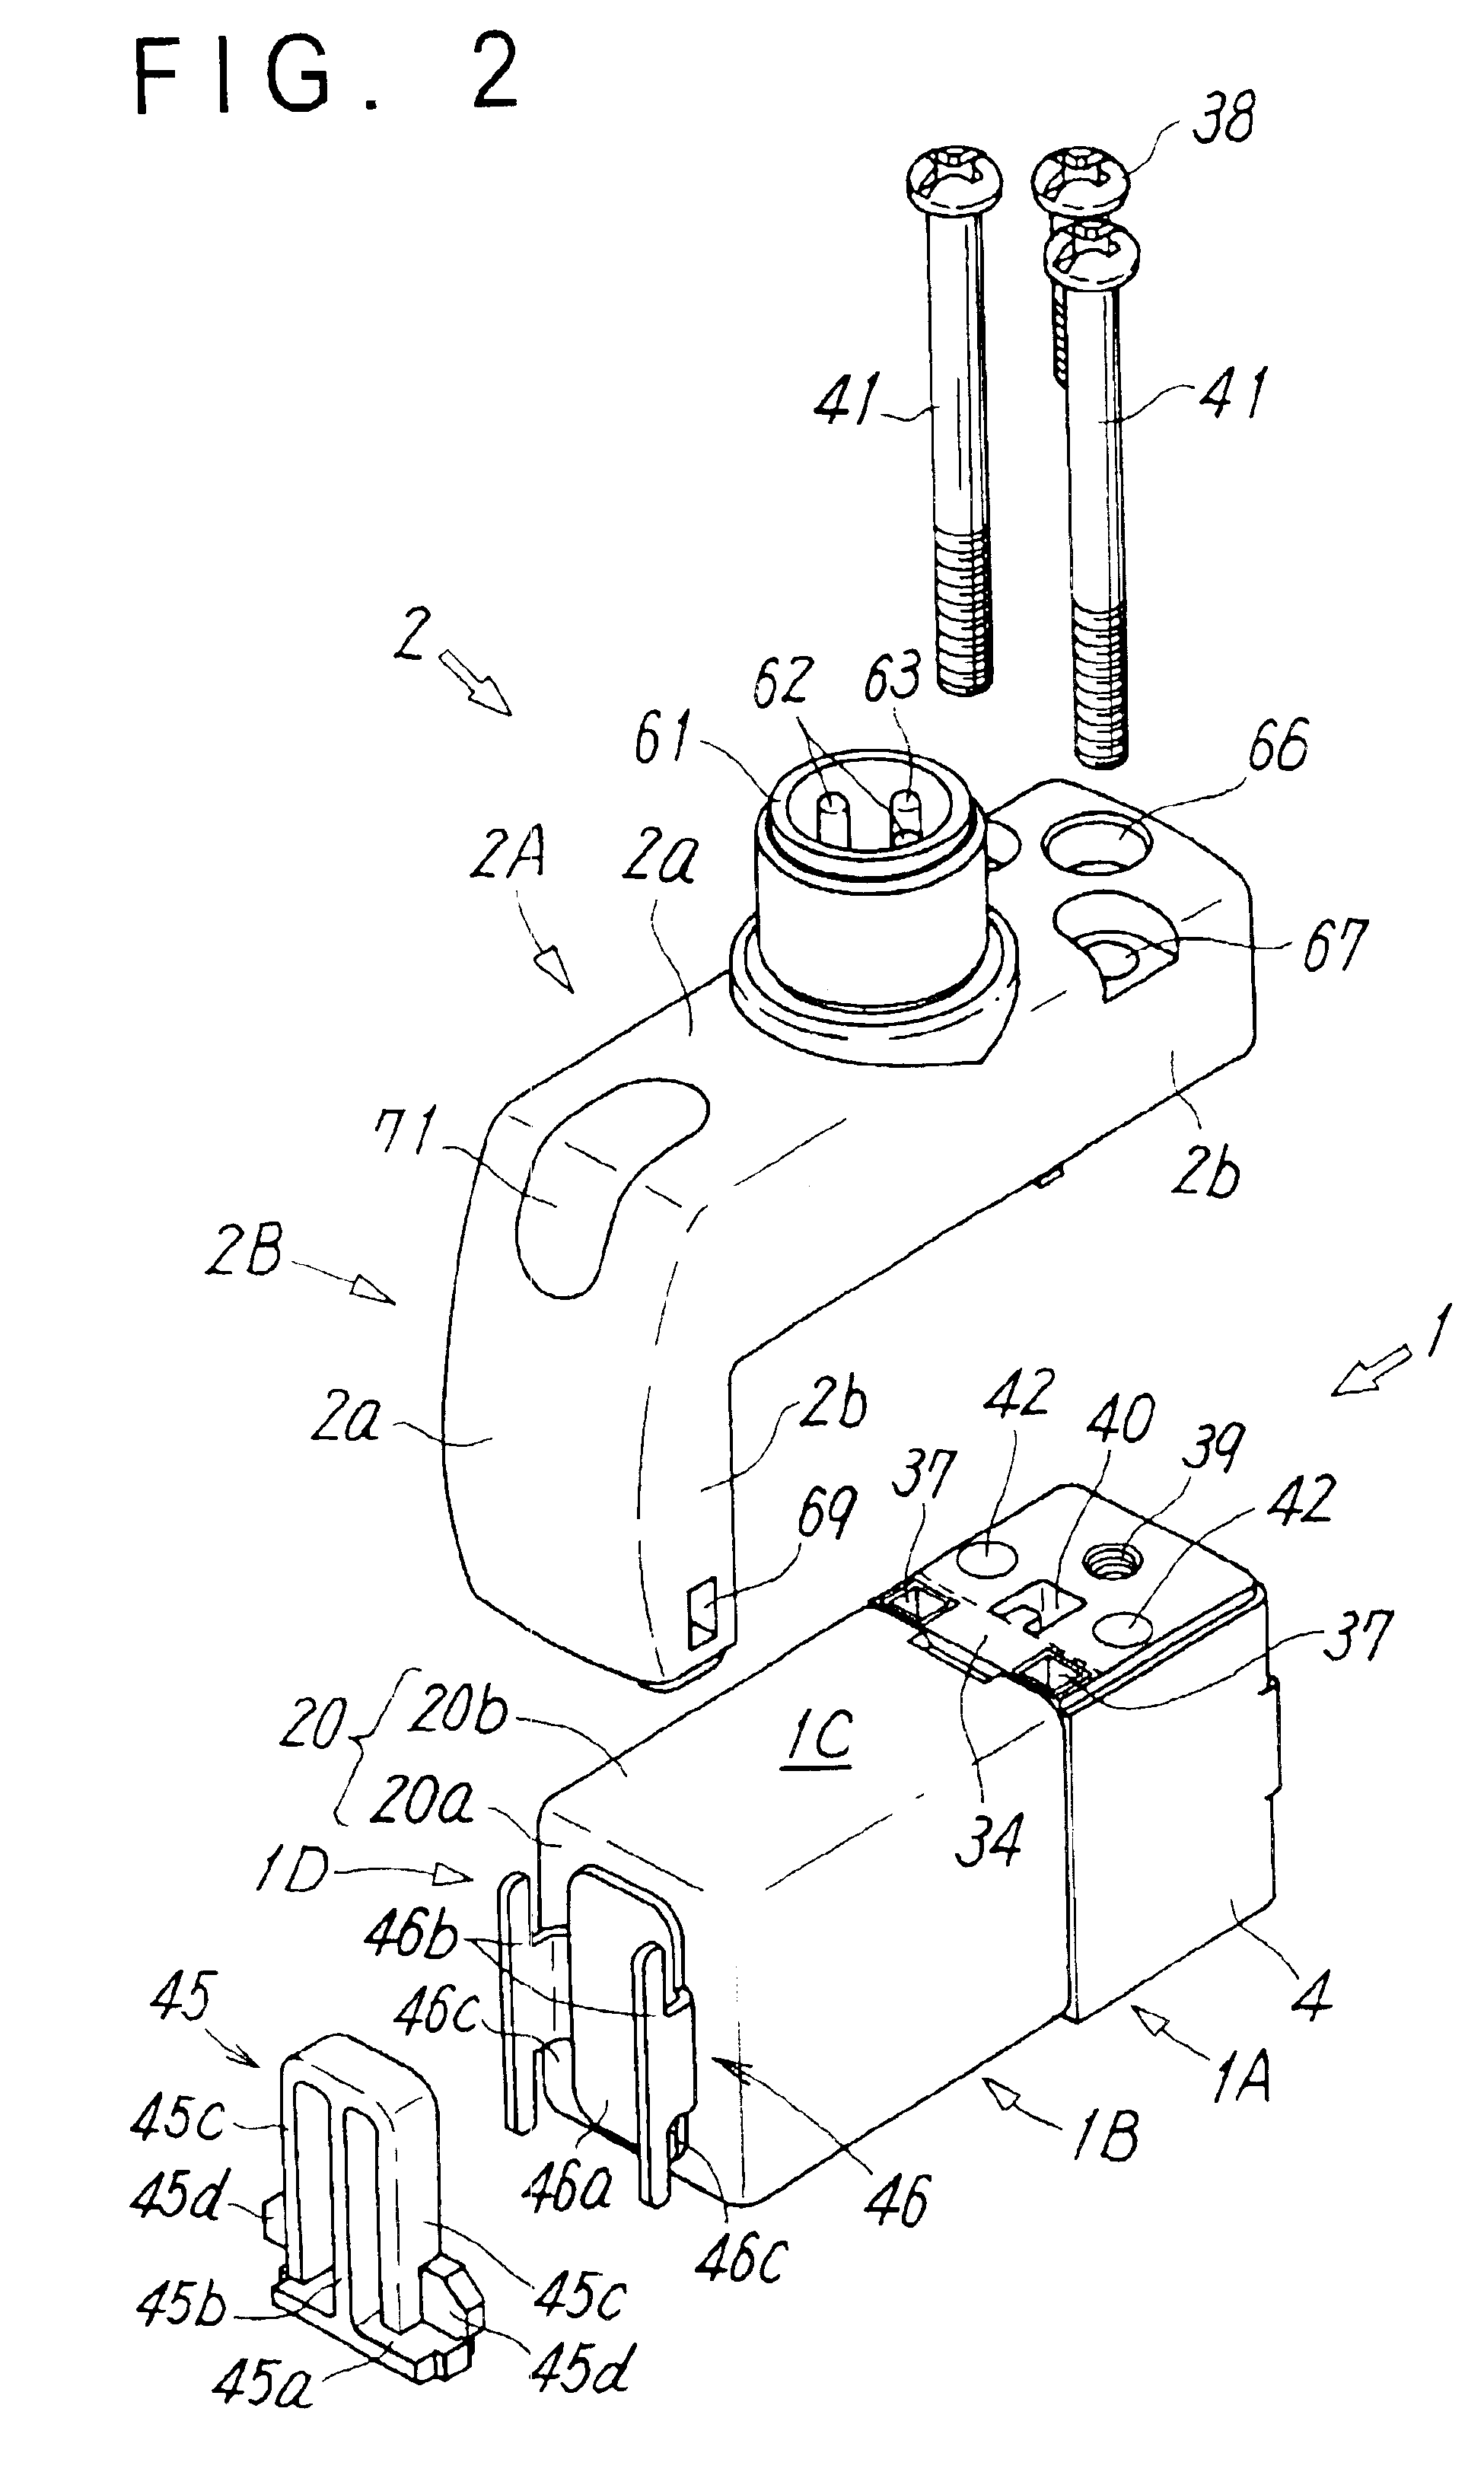 Solenoid valve with terminal box